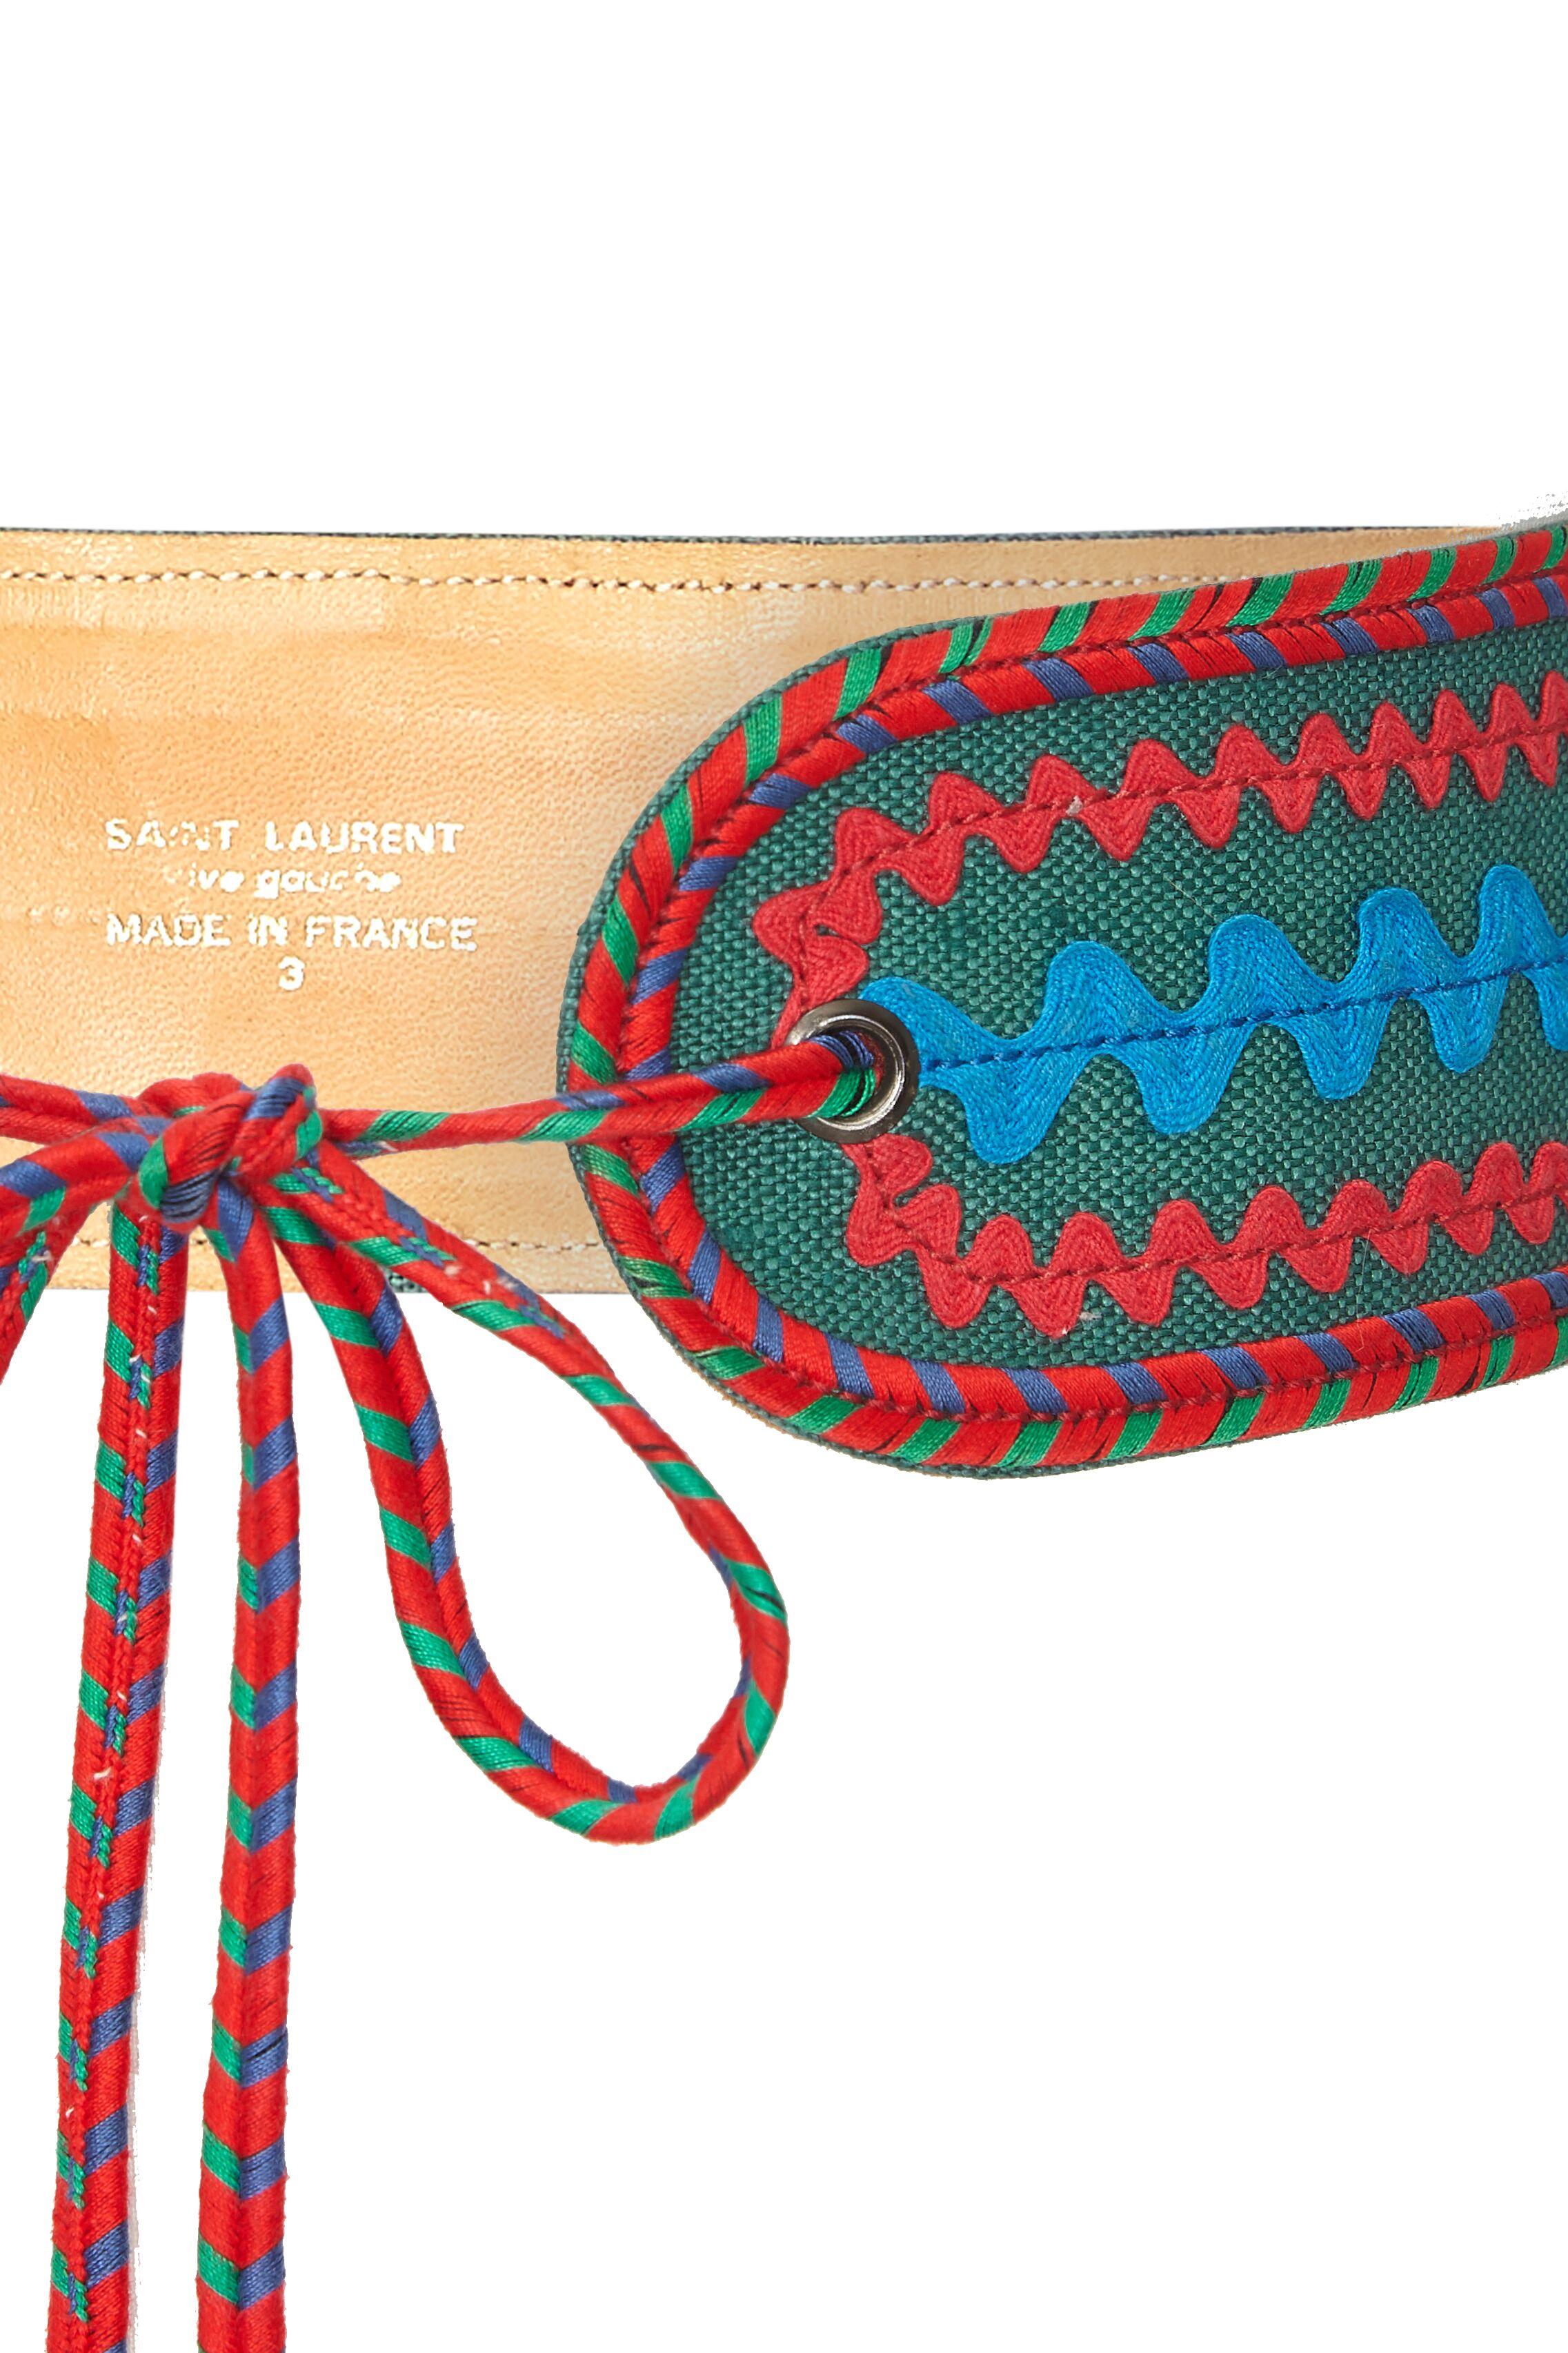 Beige Yves Saint Laurent 1970s Moroccan Style Belt With Tassels Tie Fastening